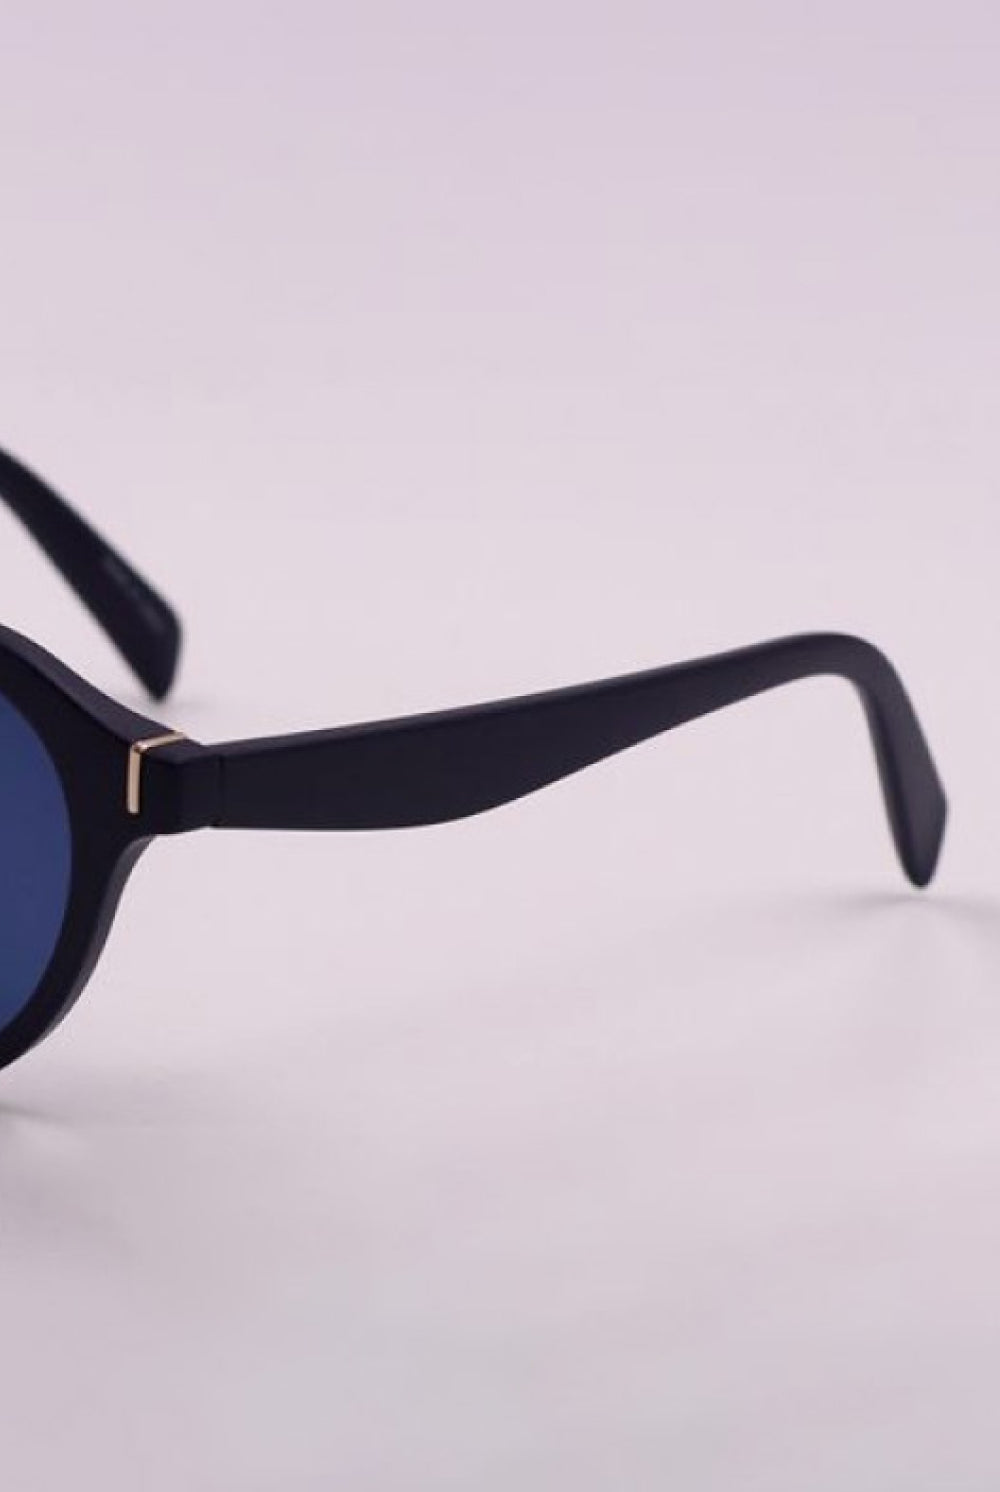 Light Gray Switch It Up 3-Piece Round Polycarbonate Full Rim Sunglasses Sunglasses